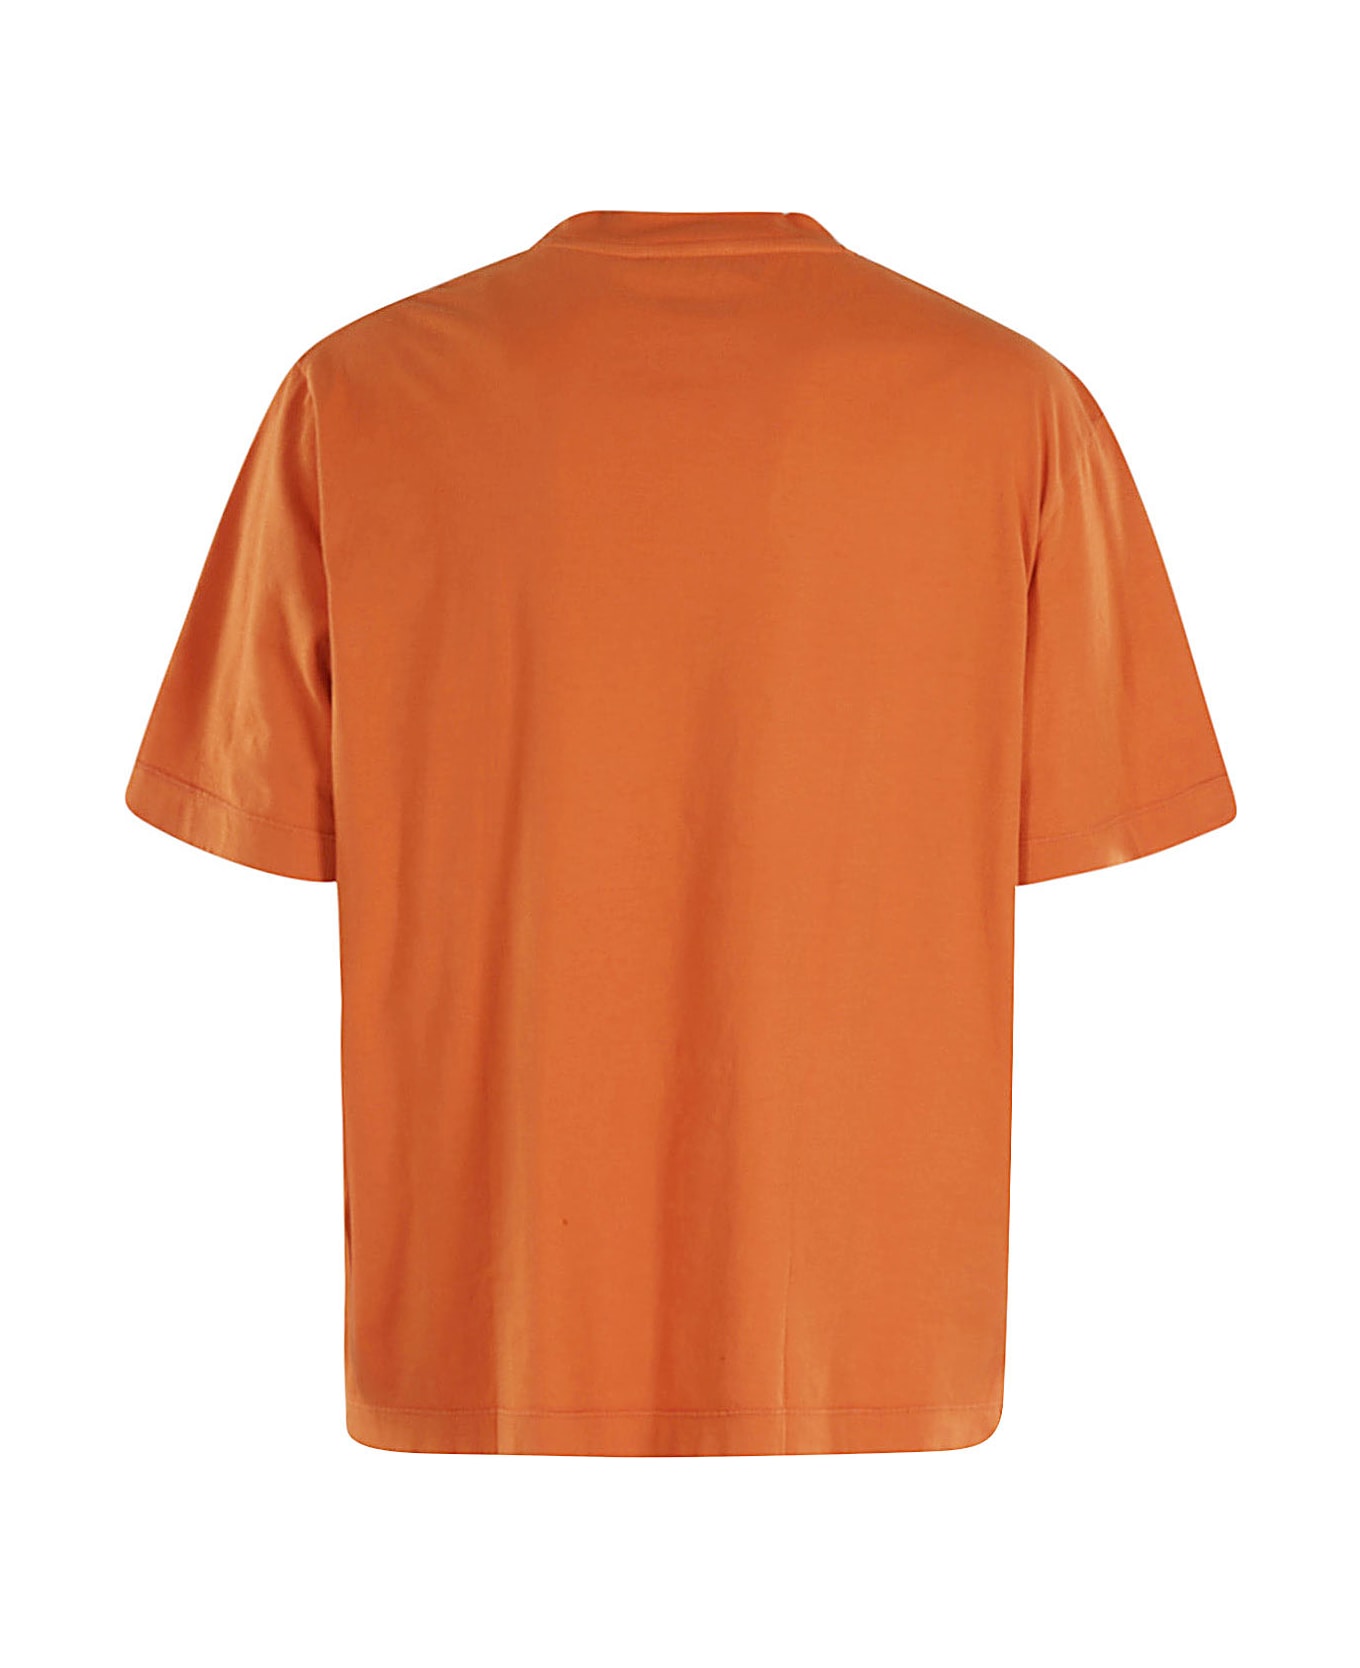 Paolo Pecora T Shirt Jersey - Arancio